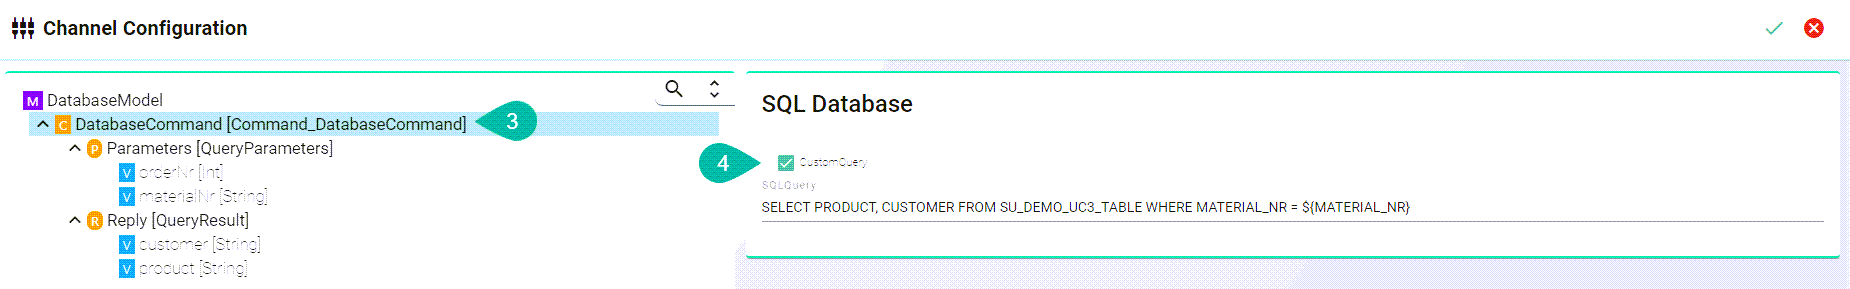 SQL Database Configuration